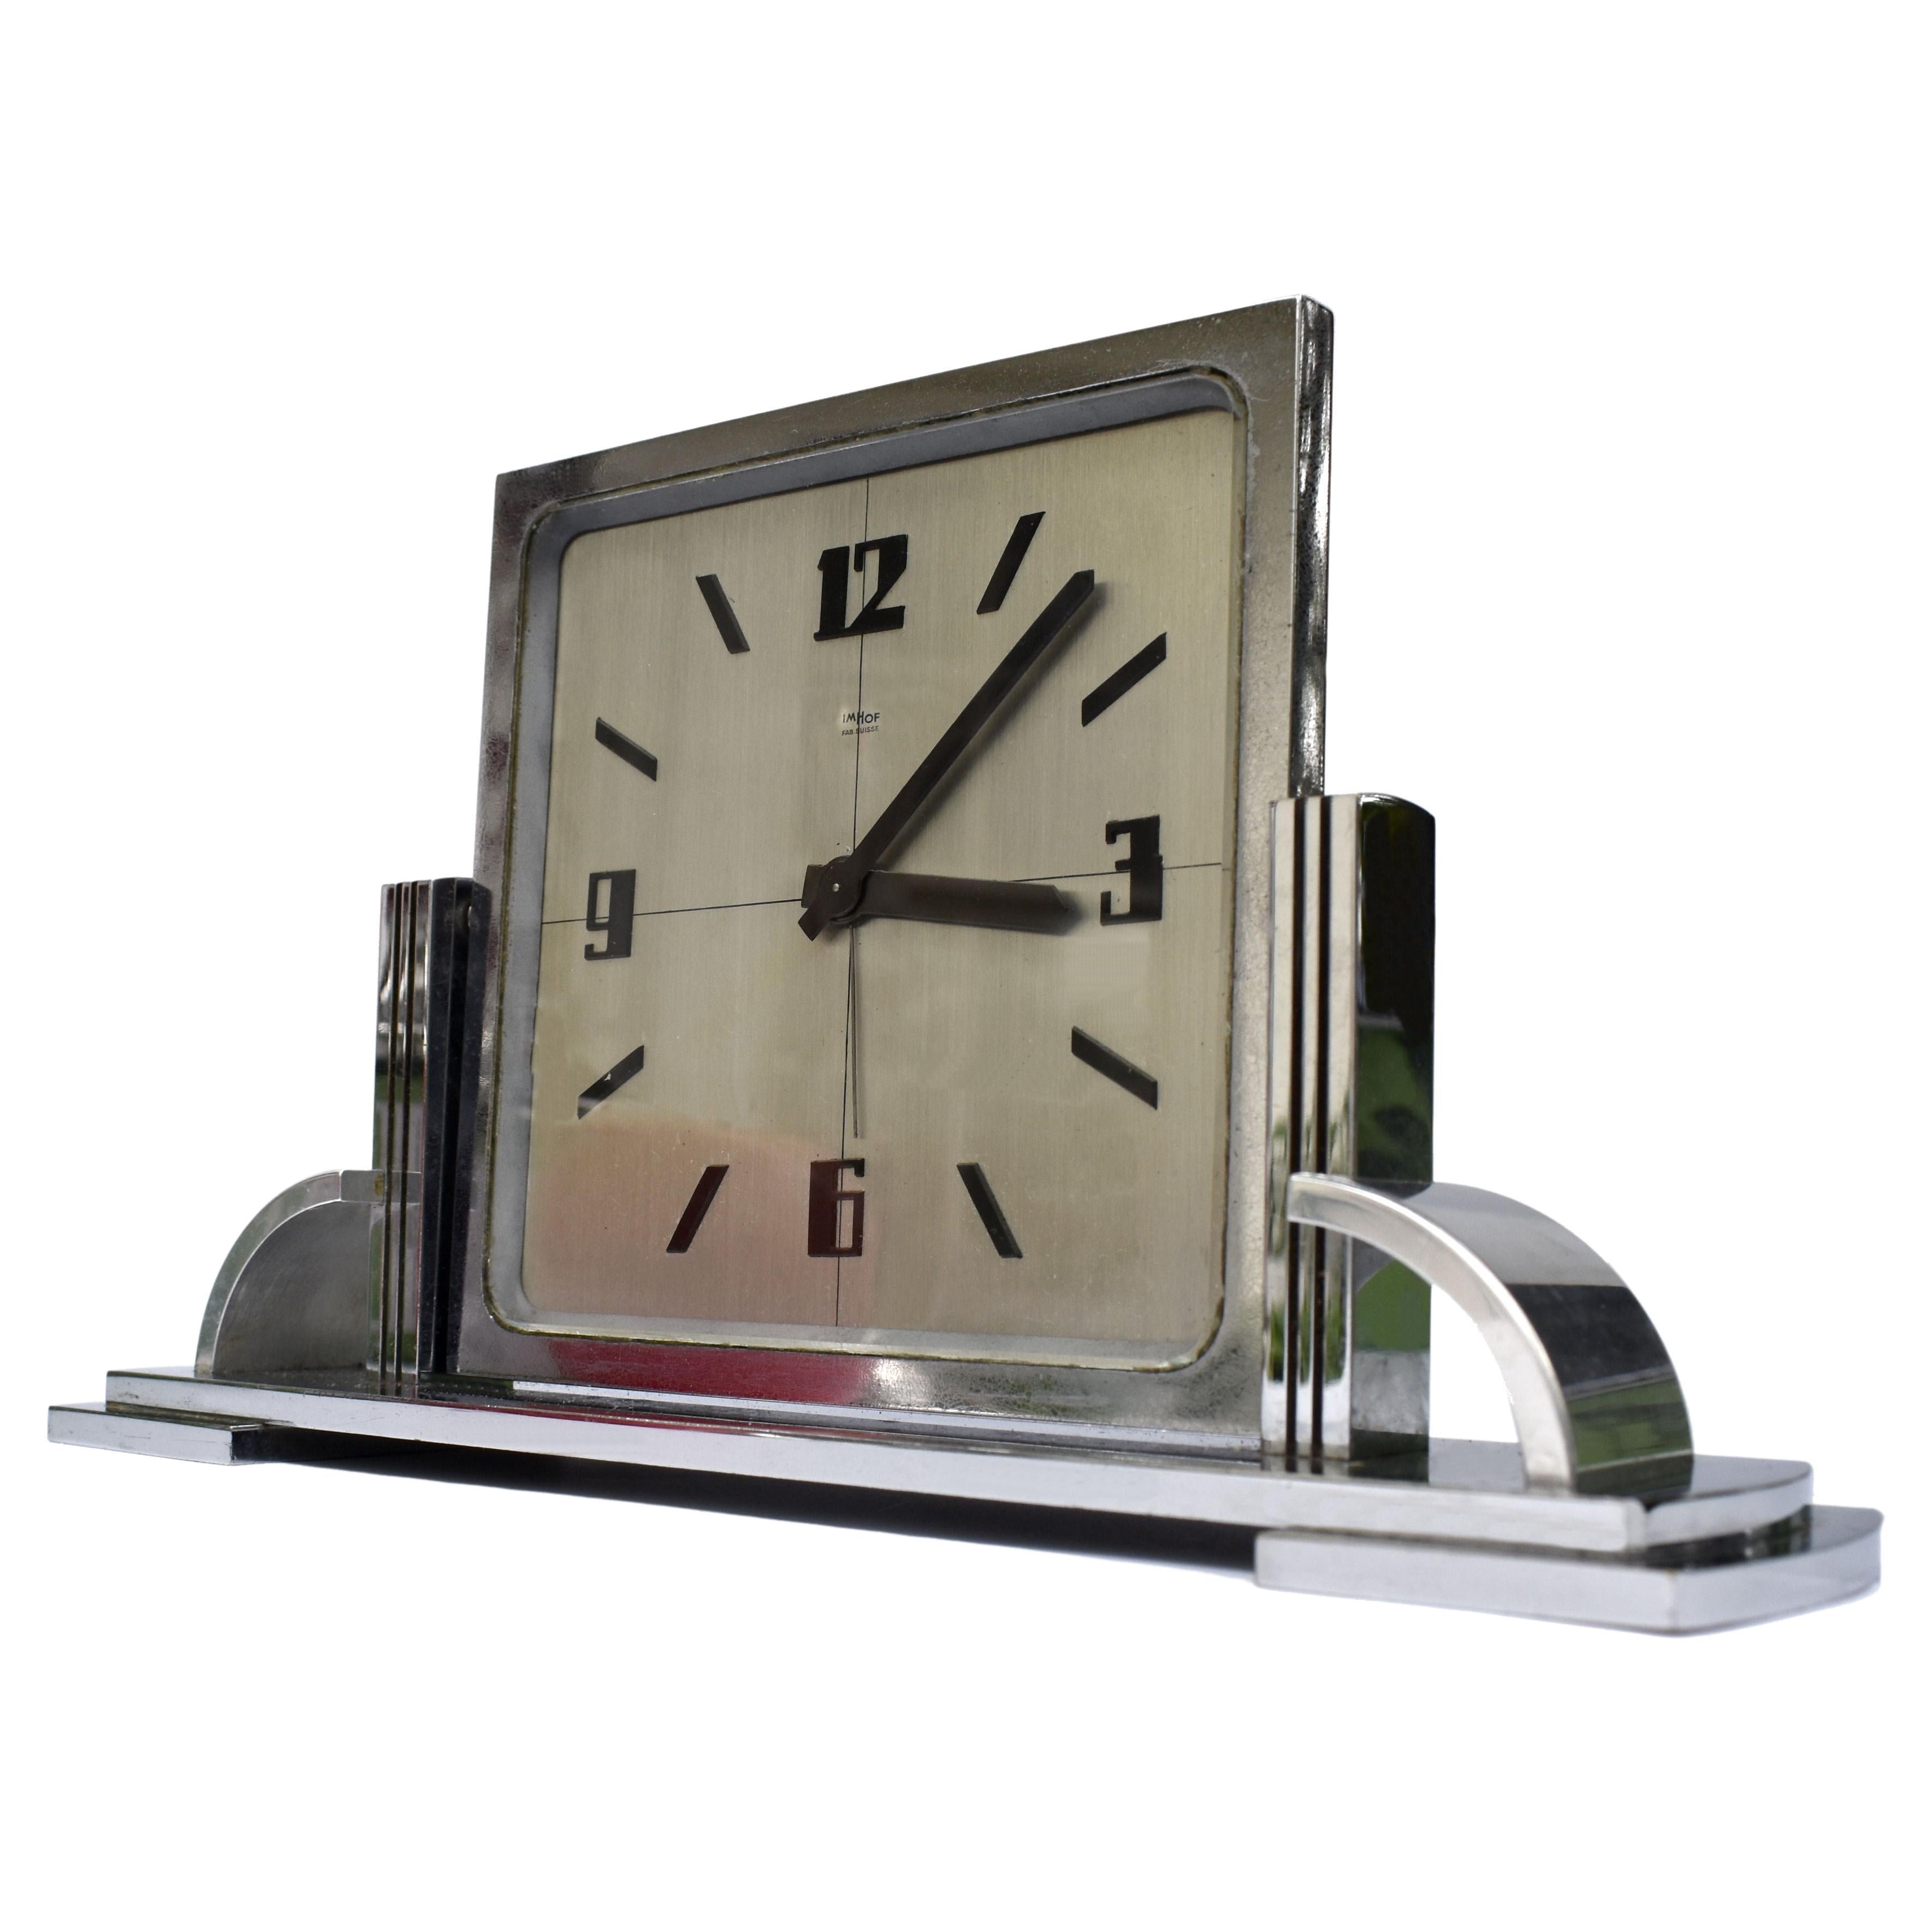 Art Deco Modernist Clock By Imhof, Swiss, c1930